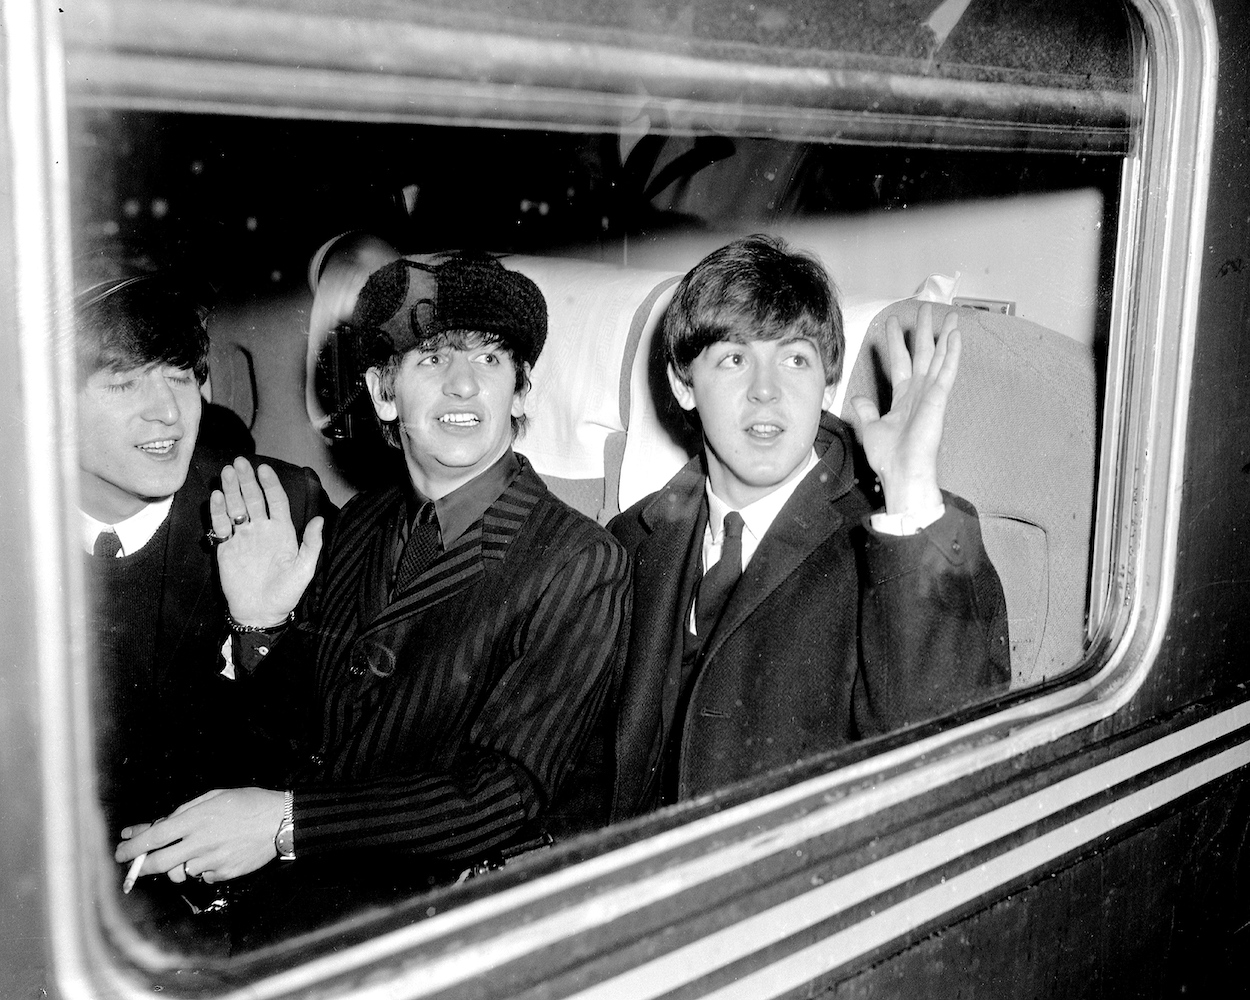 Ringo Starr (center), John Lennon and Paul McCartney aboard a New York City train in 1964.